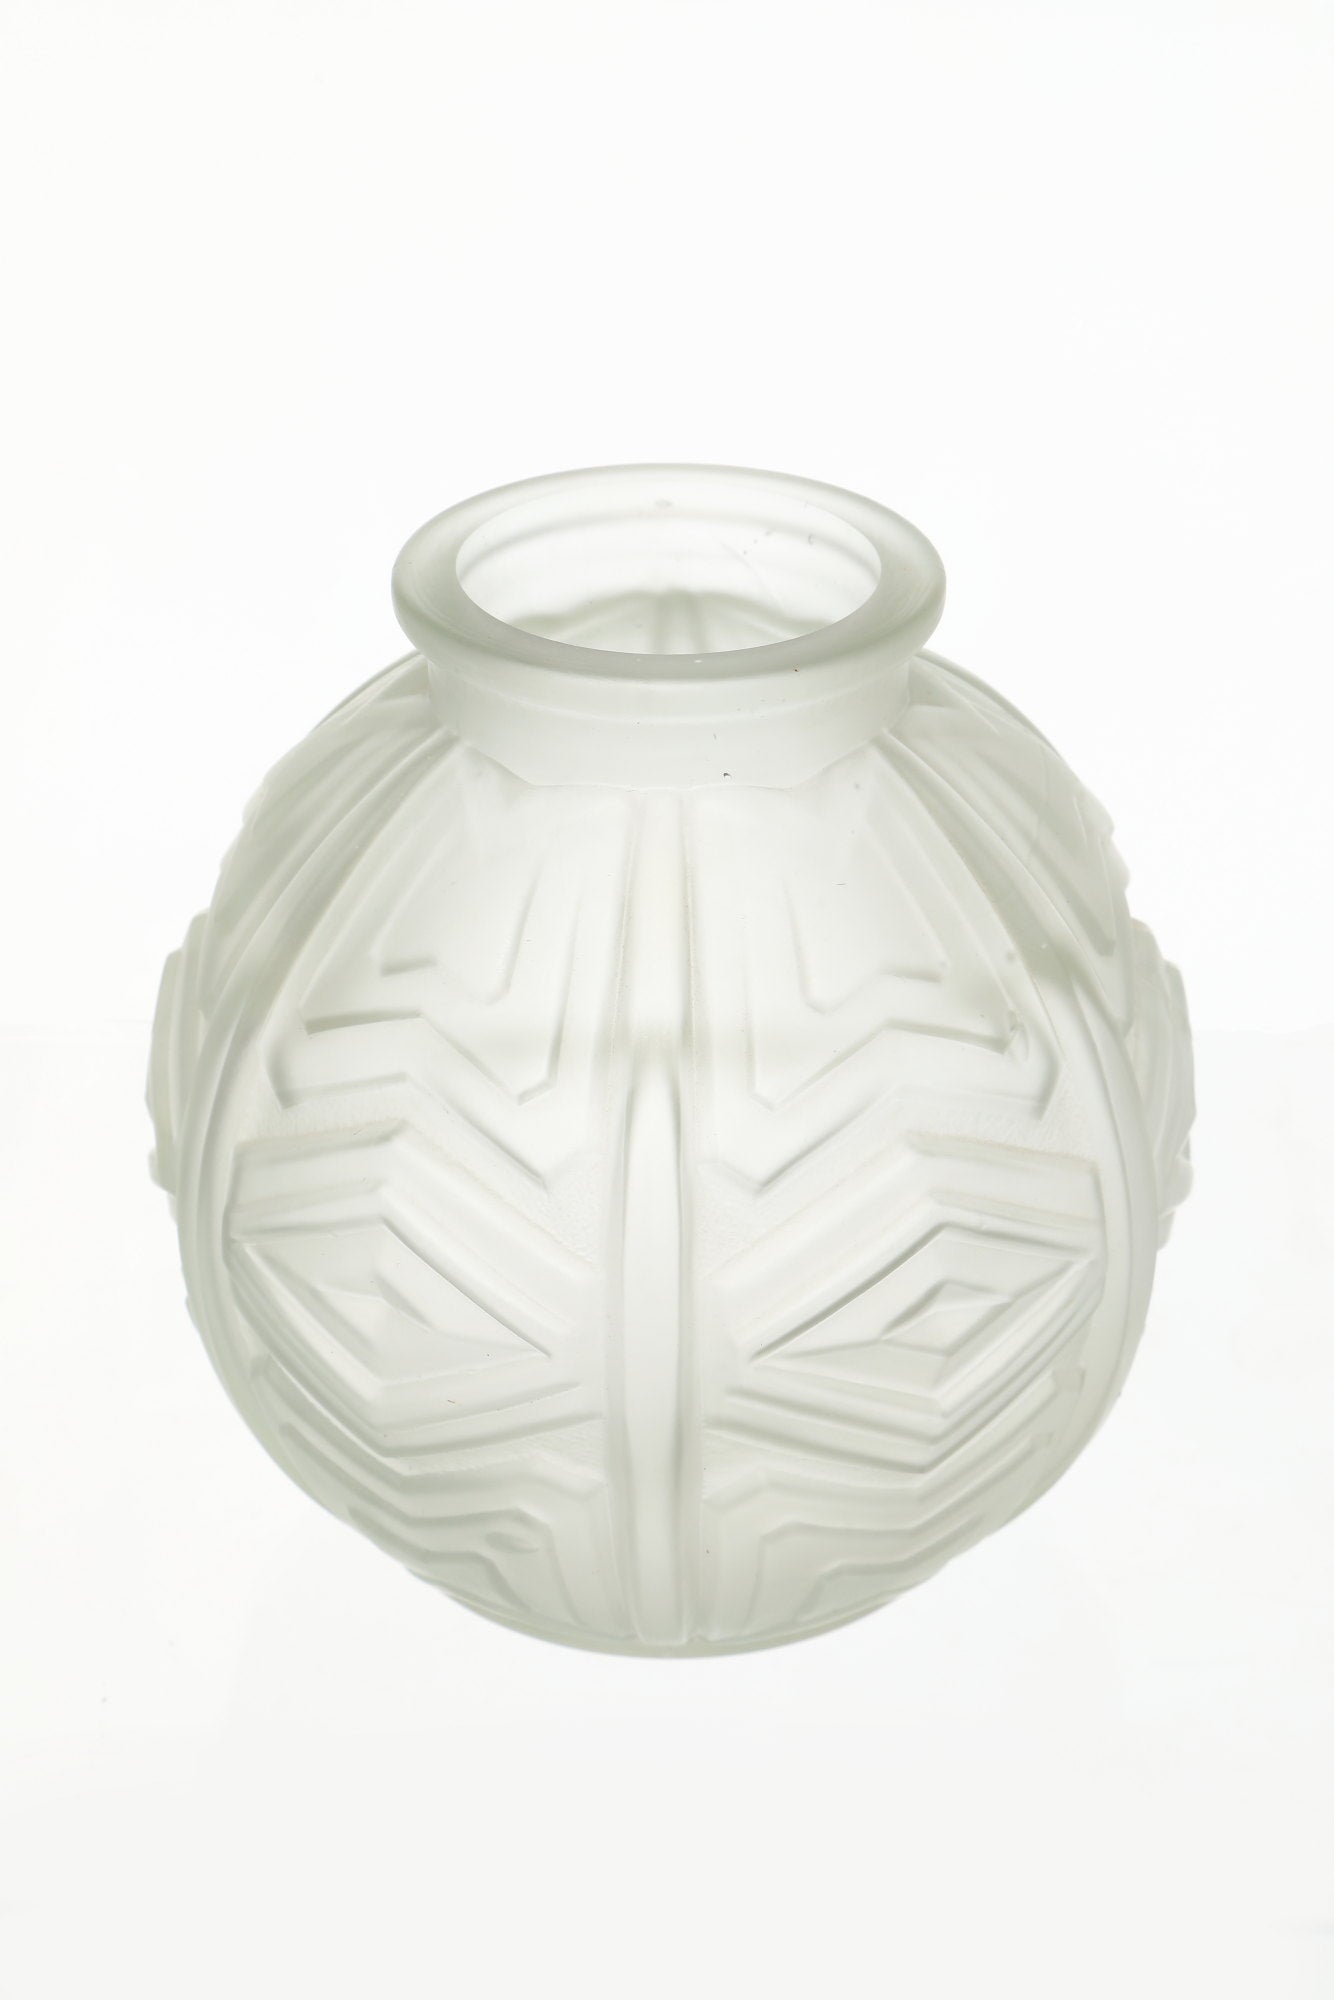 Spherical sandblasted vase with geometric decoration